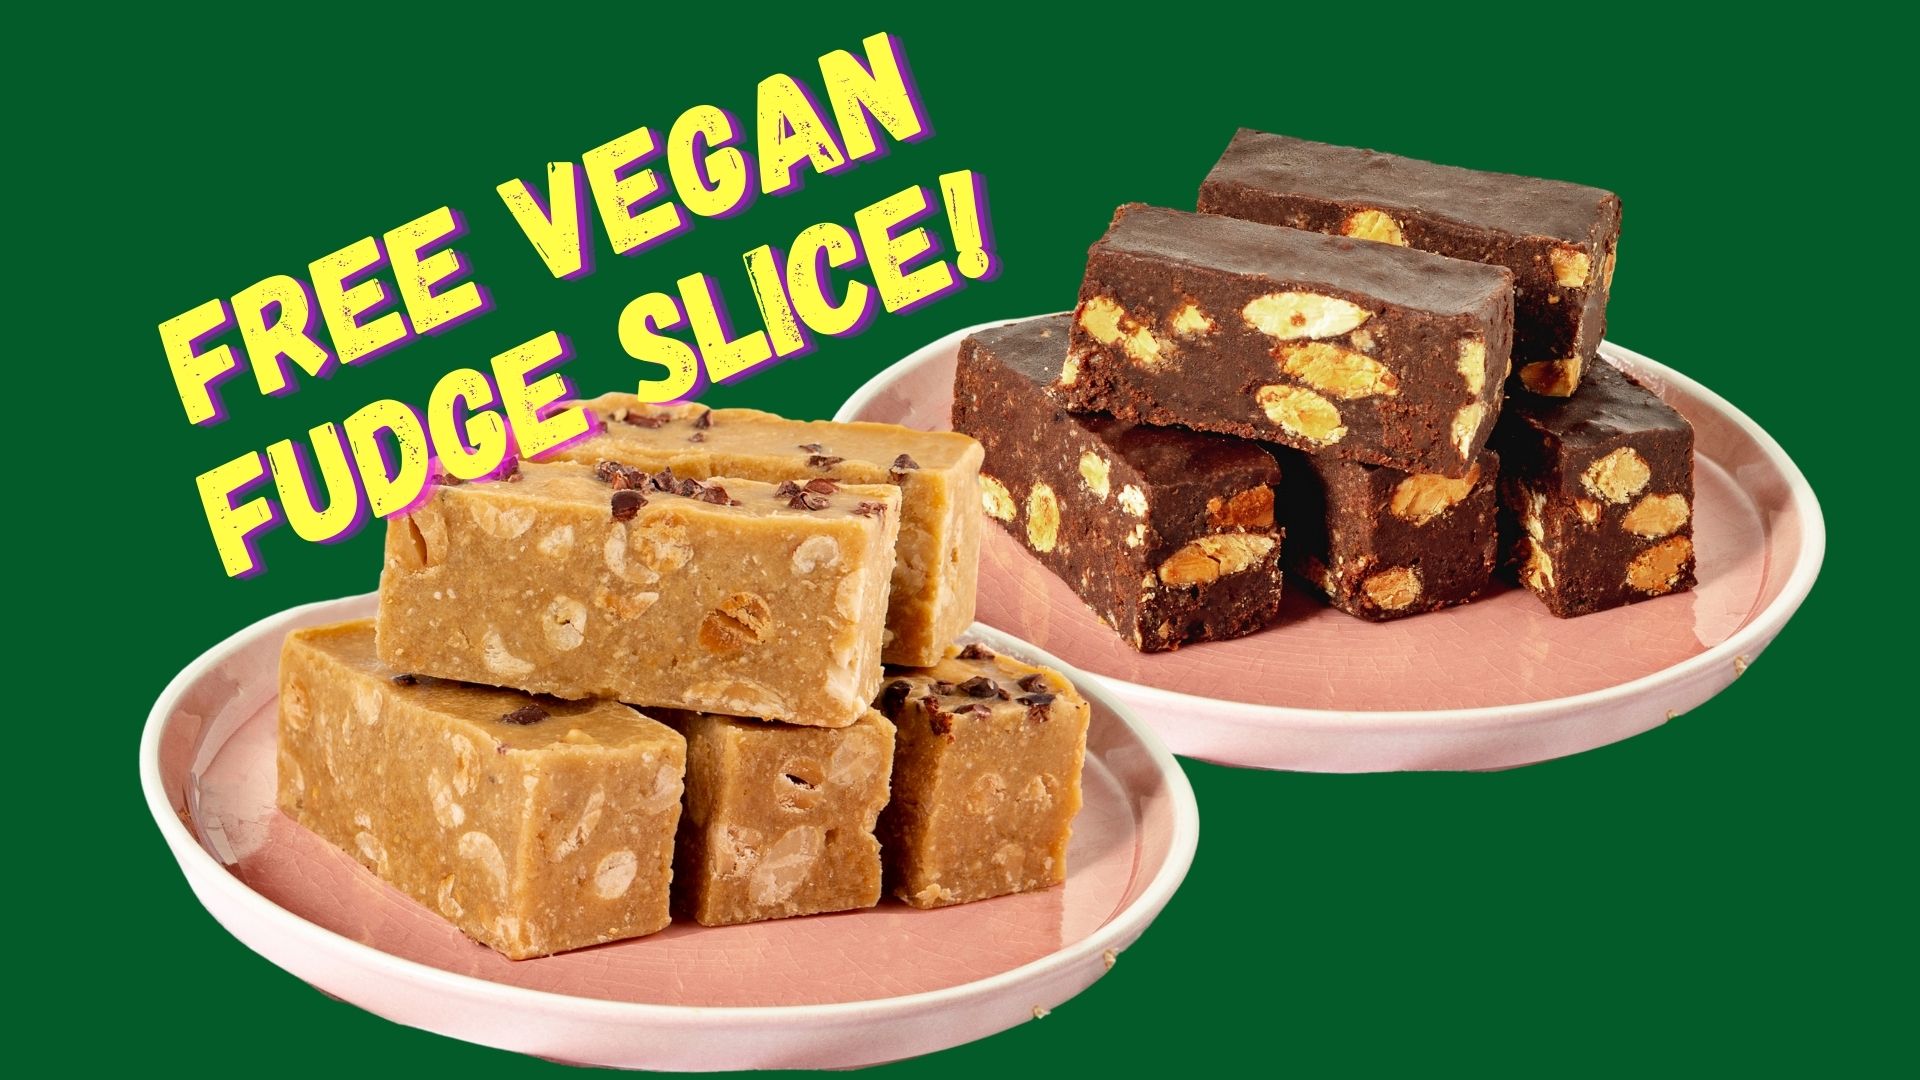 Vegan Fudge Slice from The Cheesecake Shop